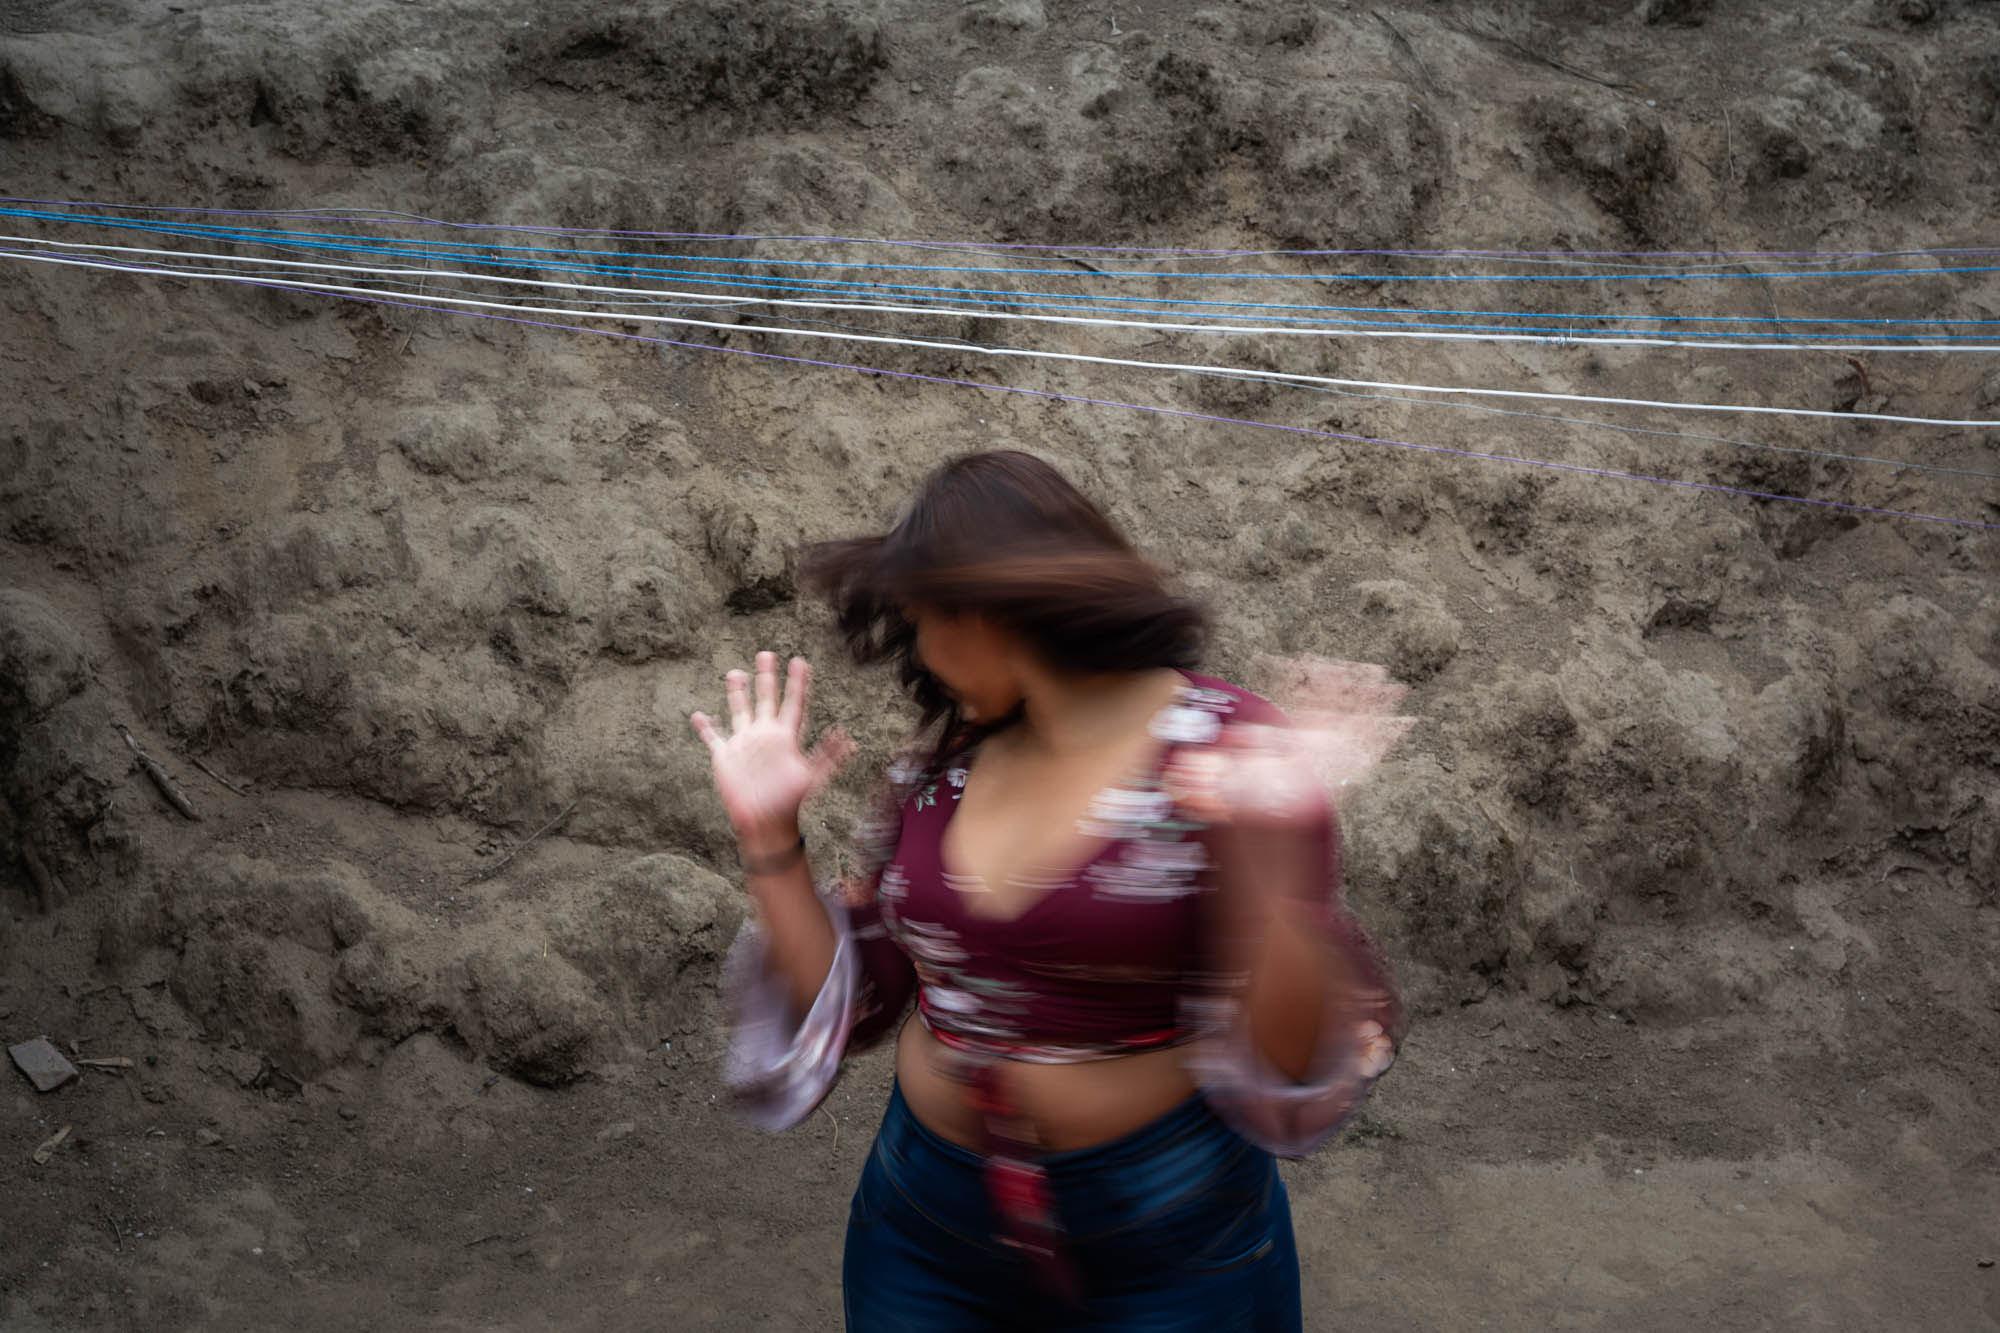 The Wall Street Journal: Venezuelan Migrants Fall Prey to Sex Traffickers - 